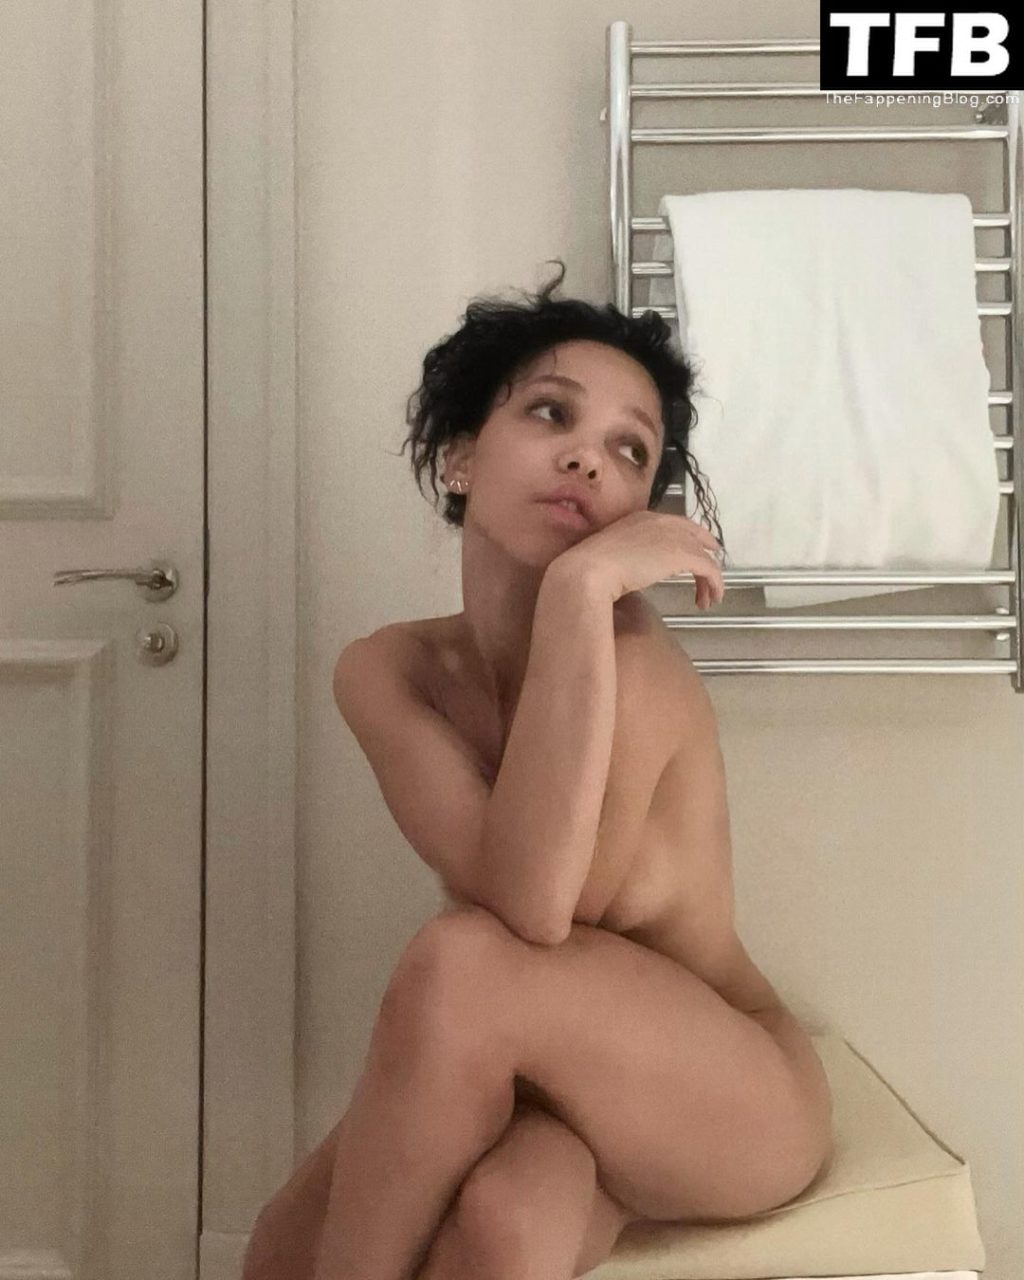 FKA Twigs Poses Naked (4 Photos)